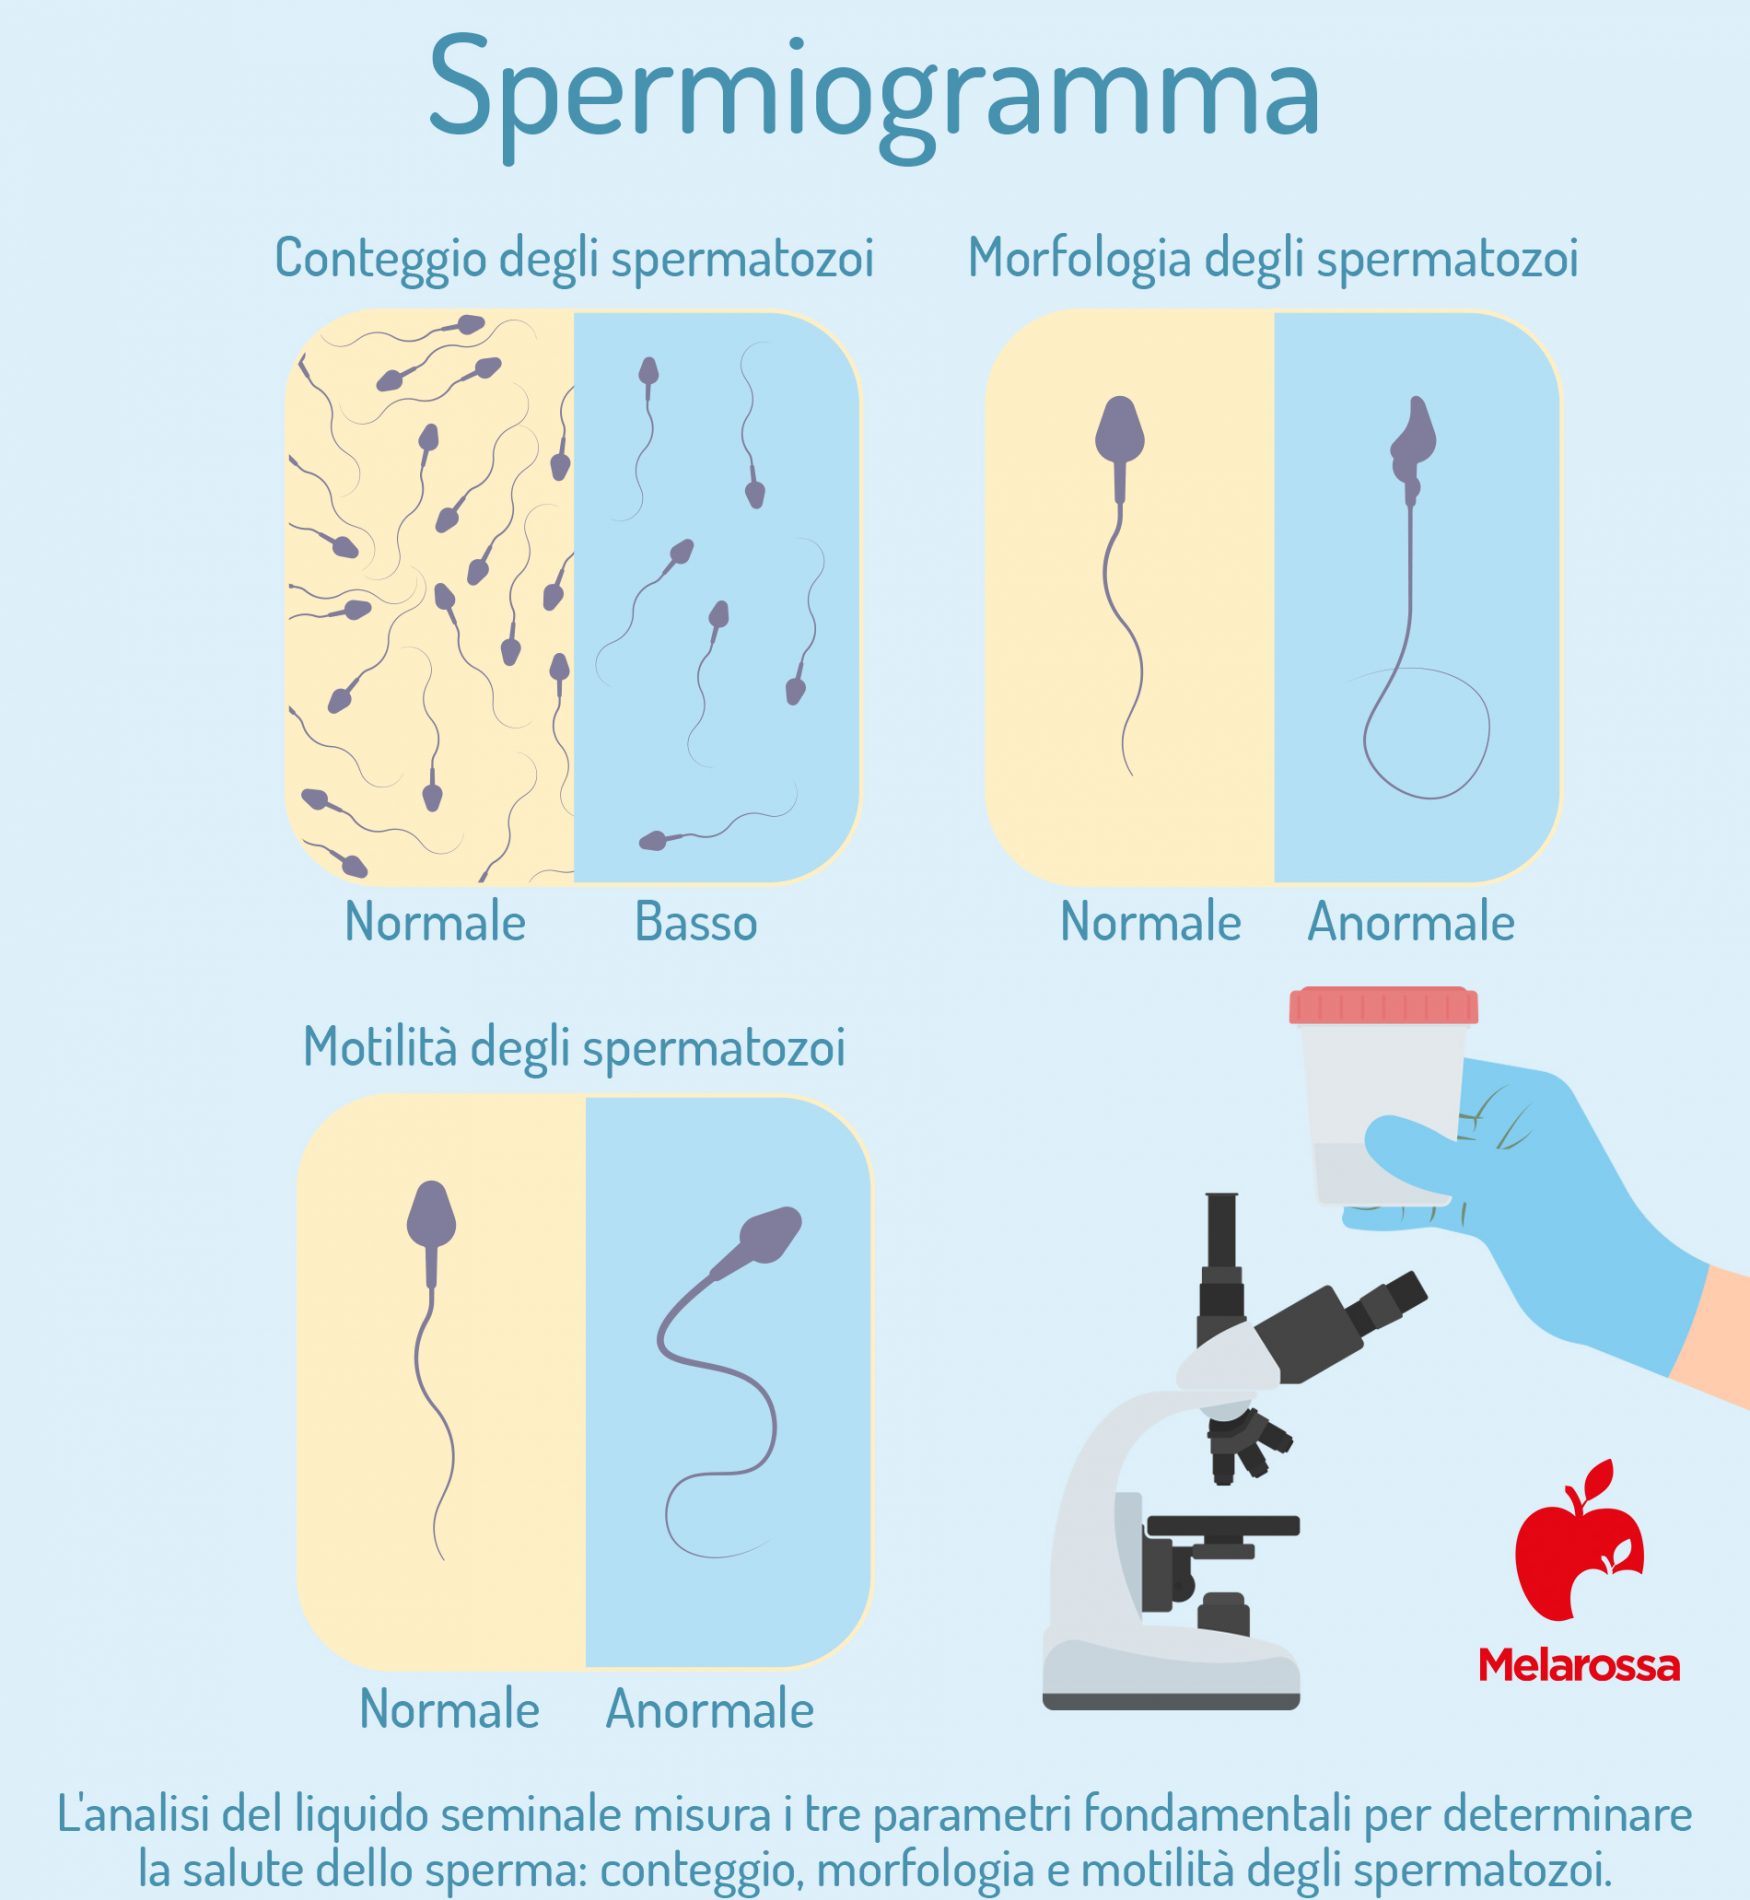 spermiogramma: analisi